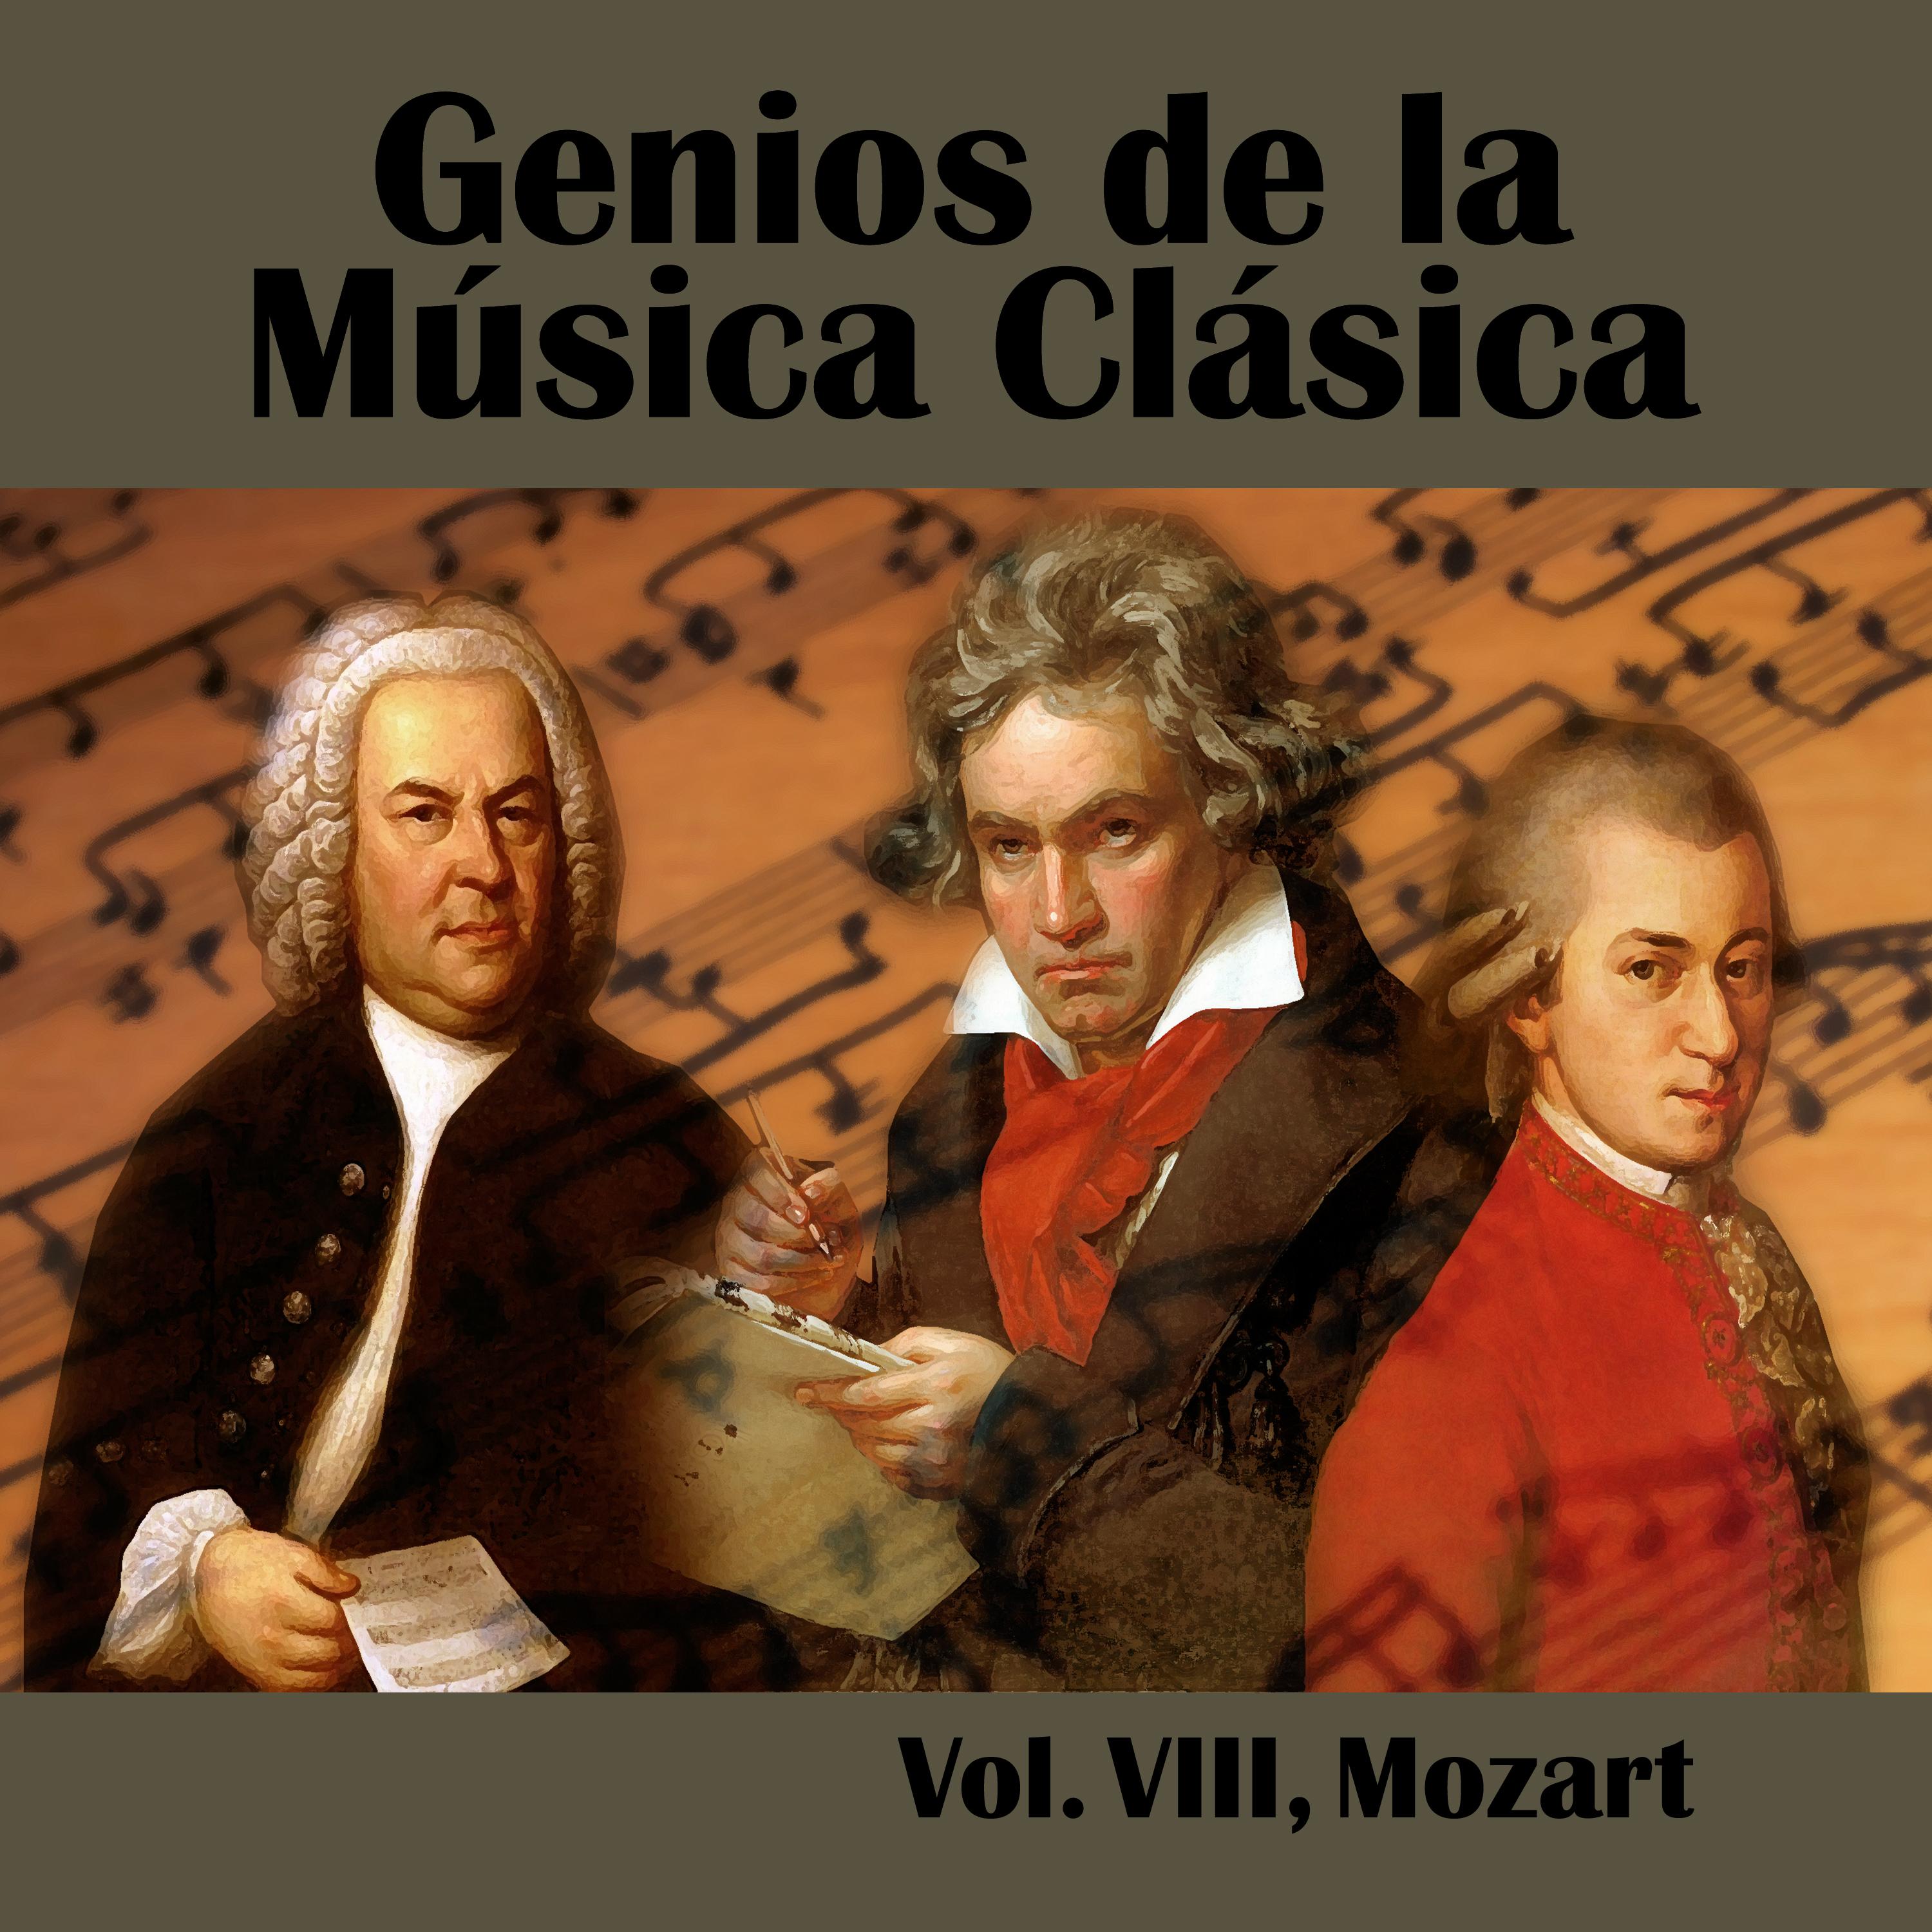 Genios de la Mu sica Cla sica Vol. VIII, Mozart